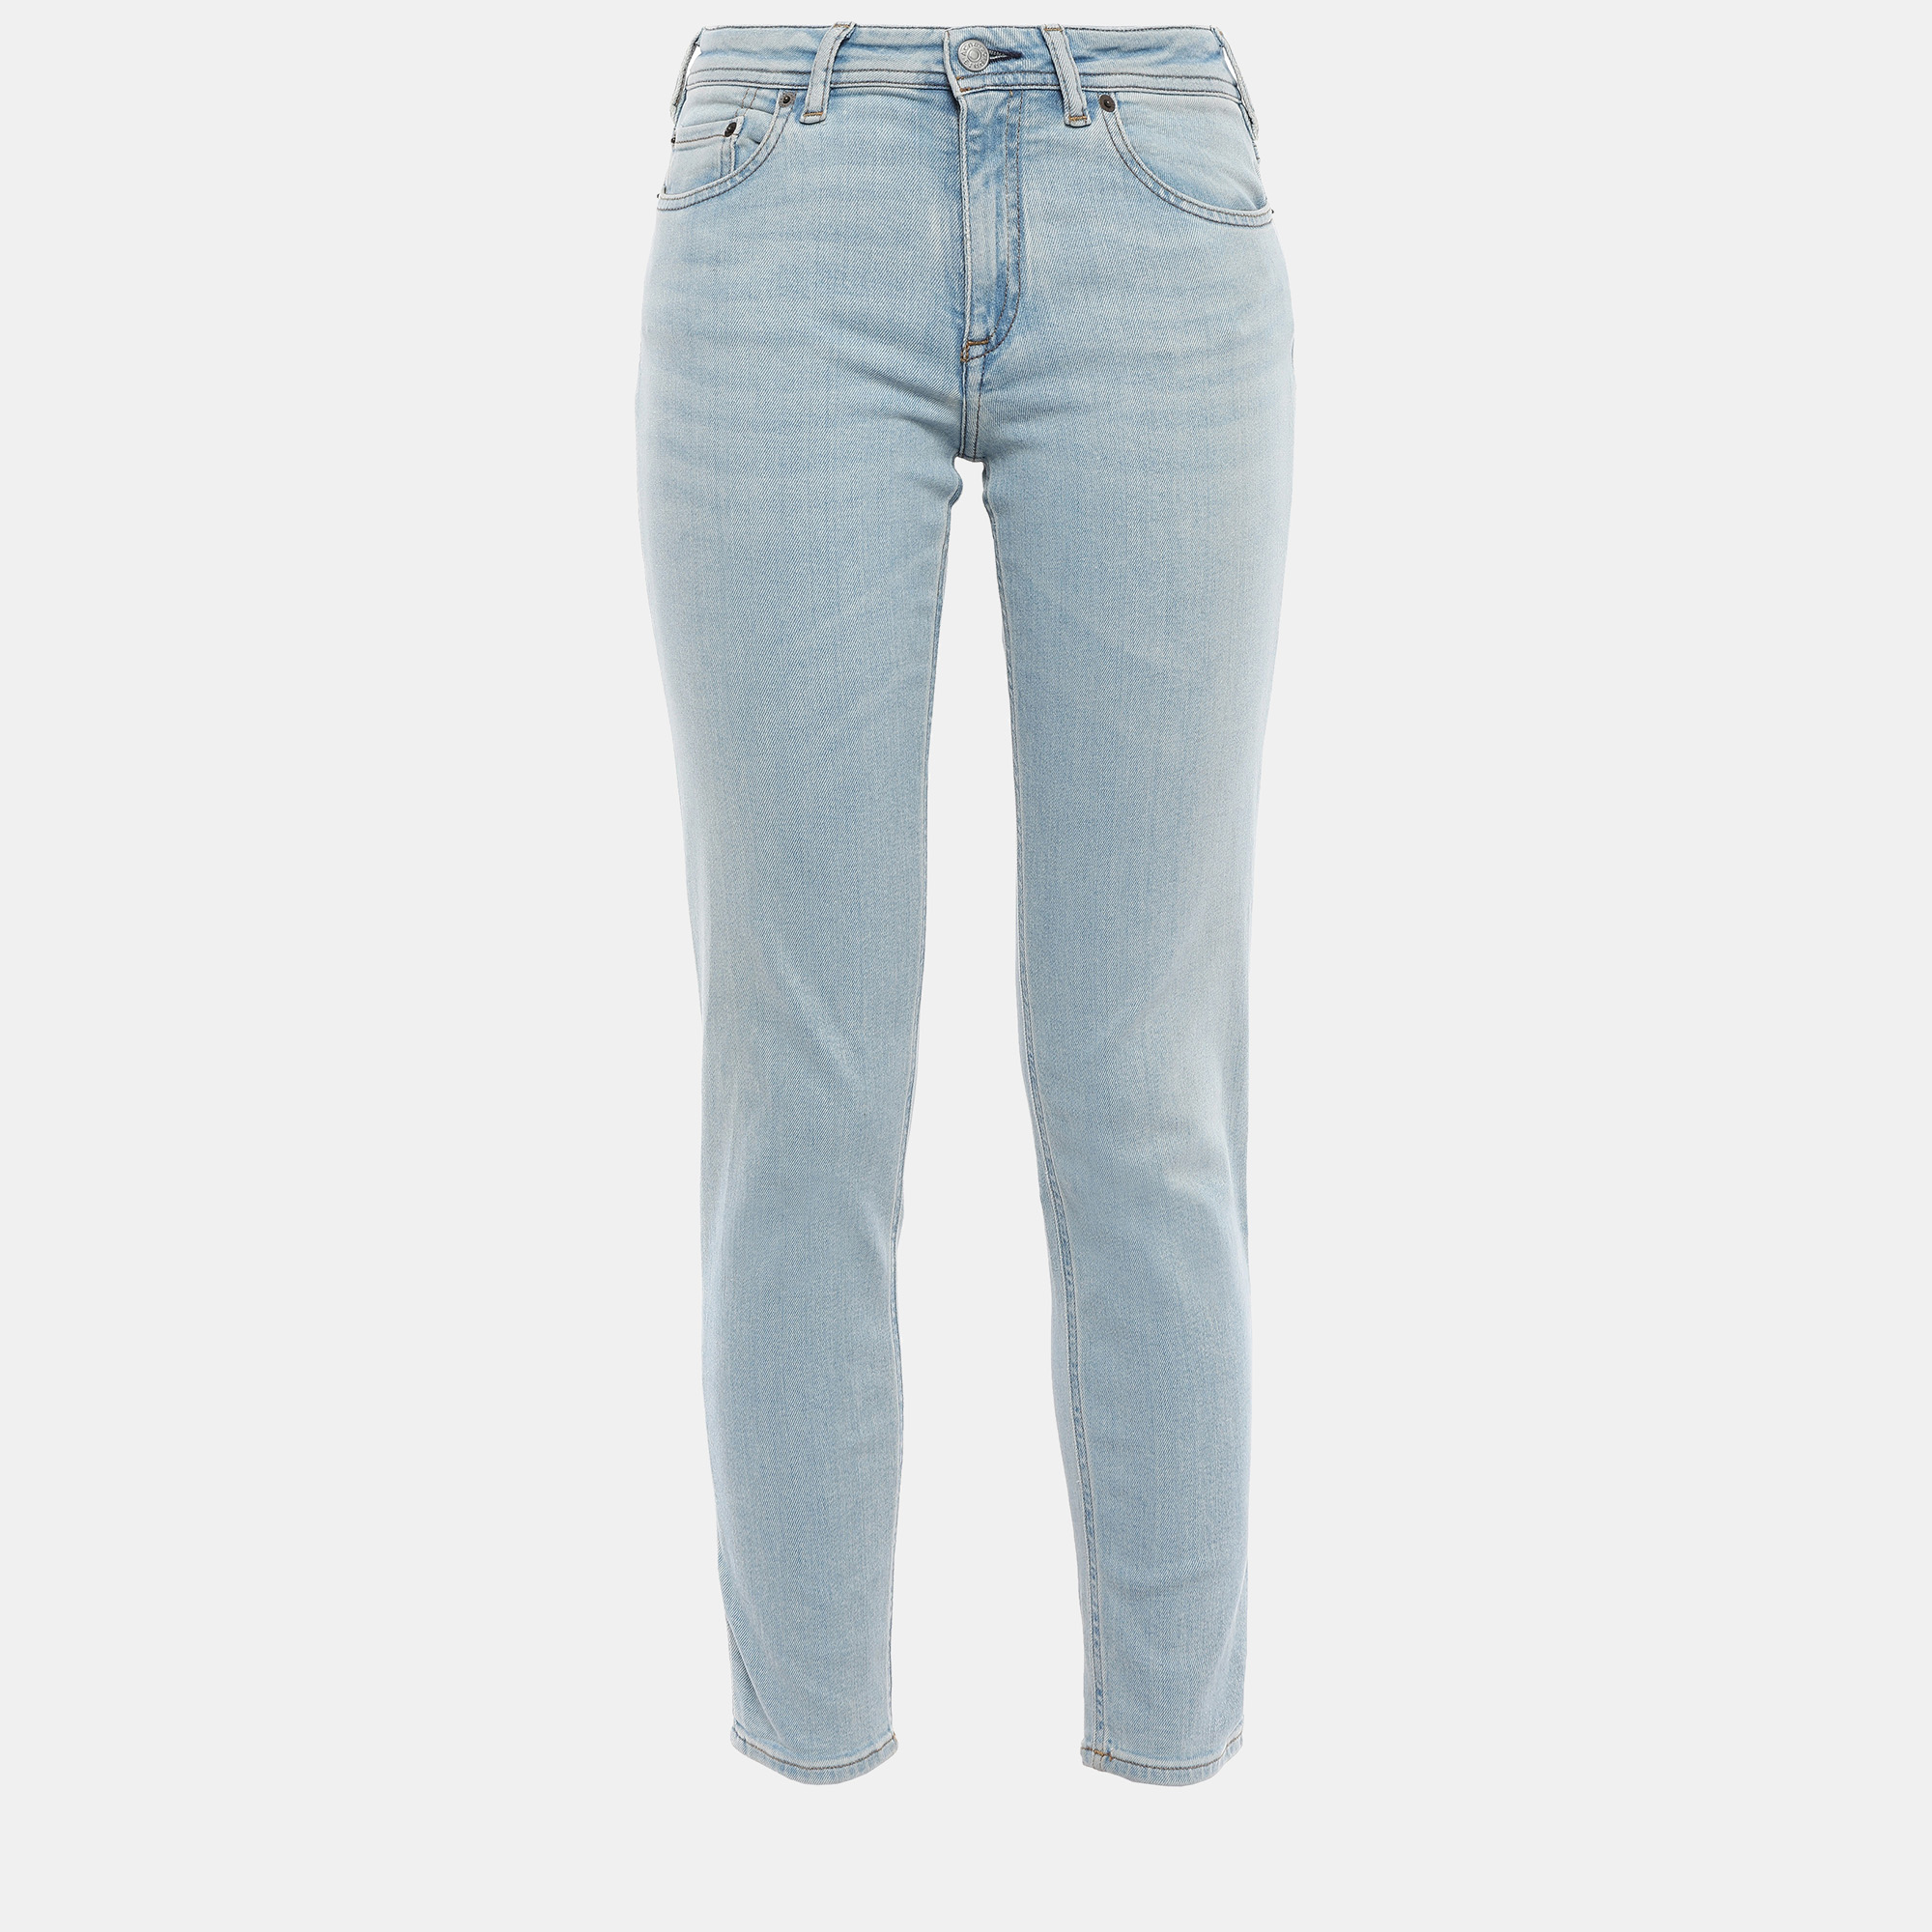 Acne studios cotton skinny leg jeans 23w-32l